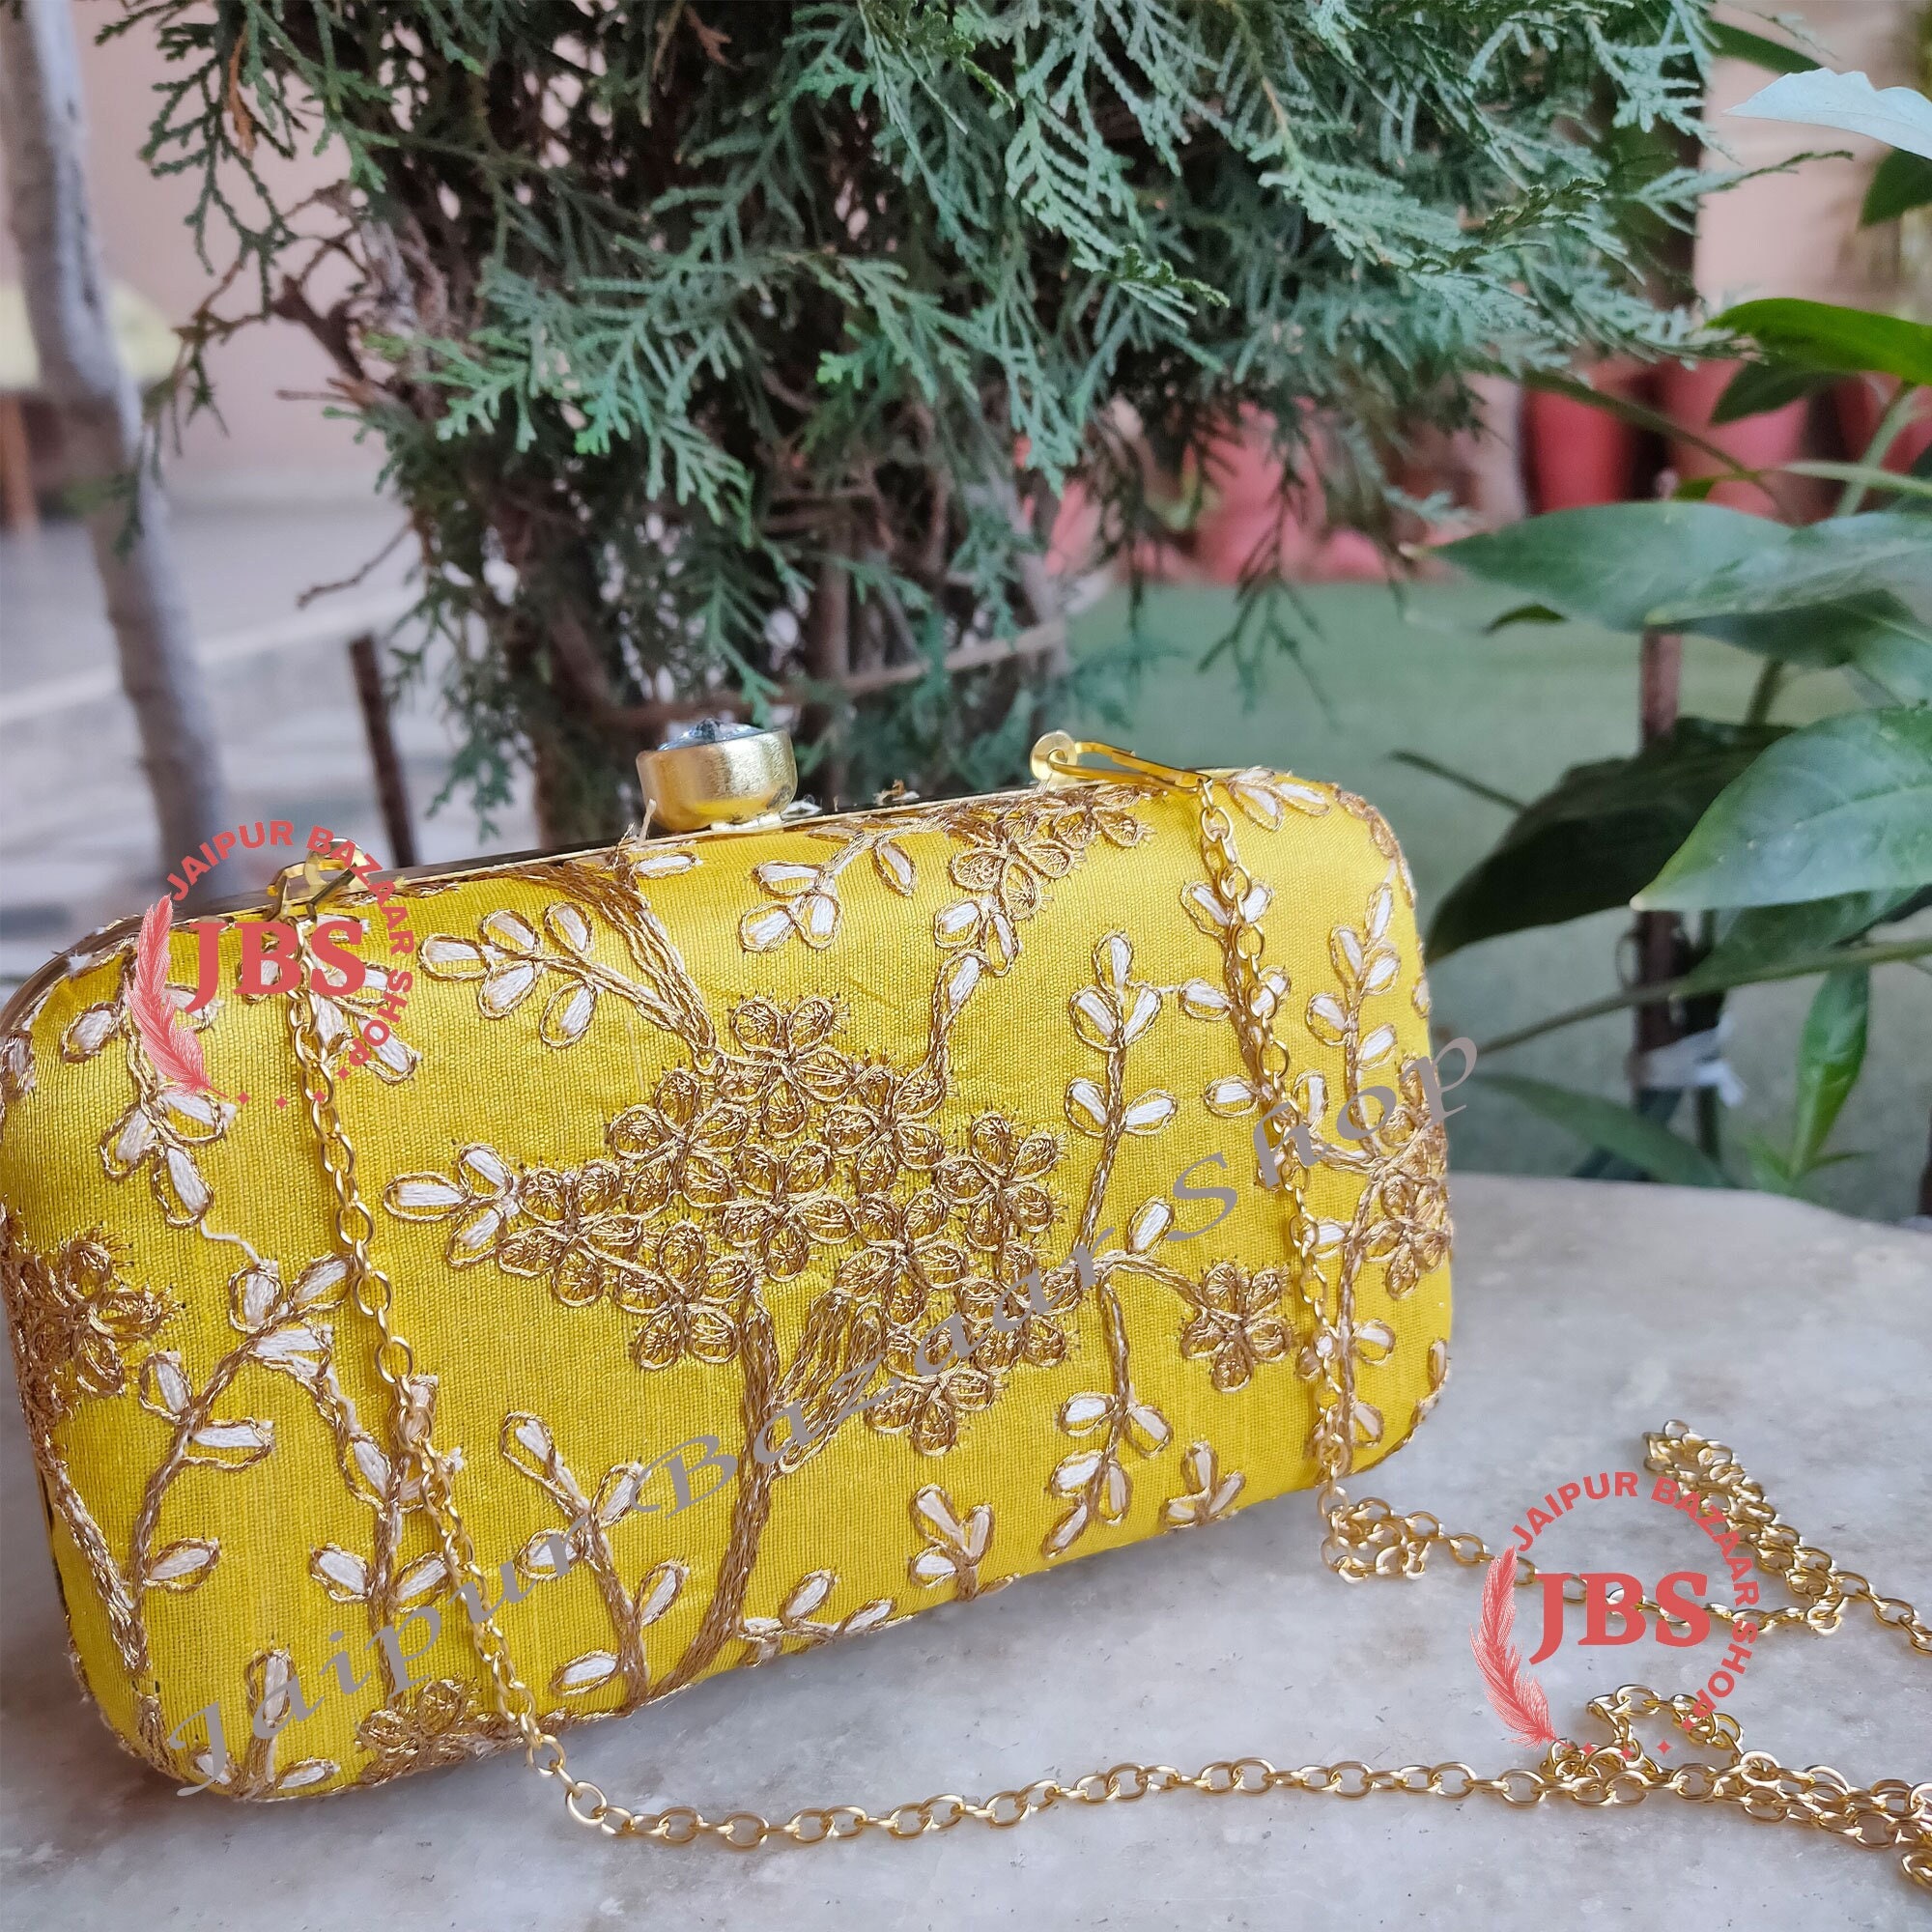 Designer Purse/ Handbag Party Favor Treat/ Gift Box Choose Design